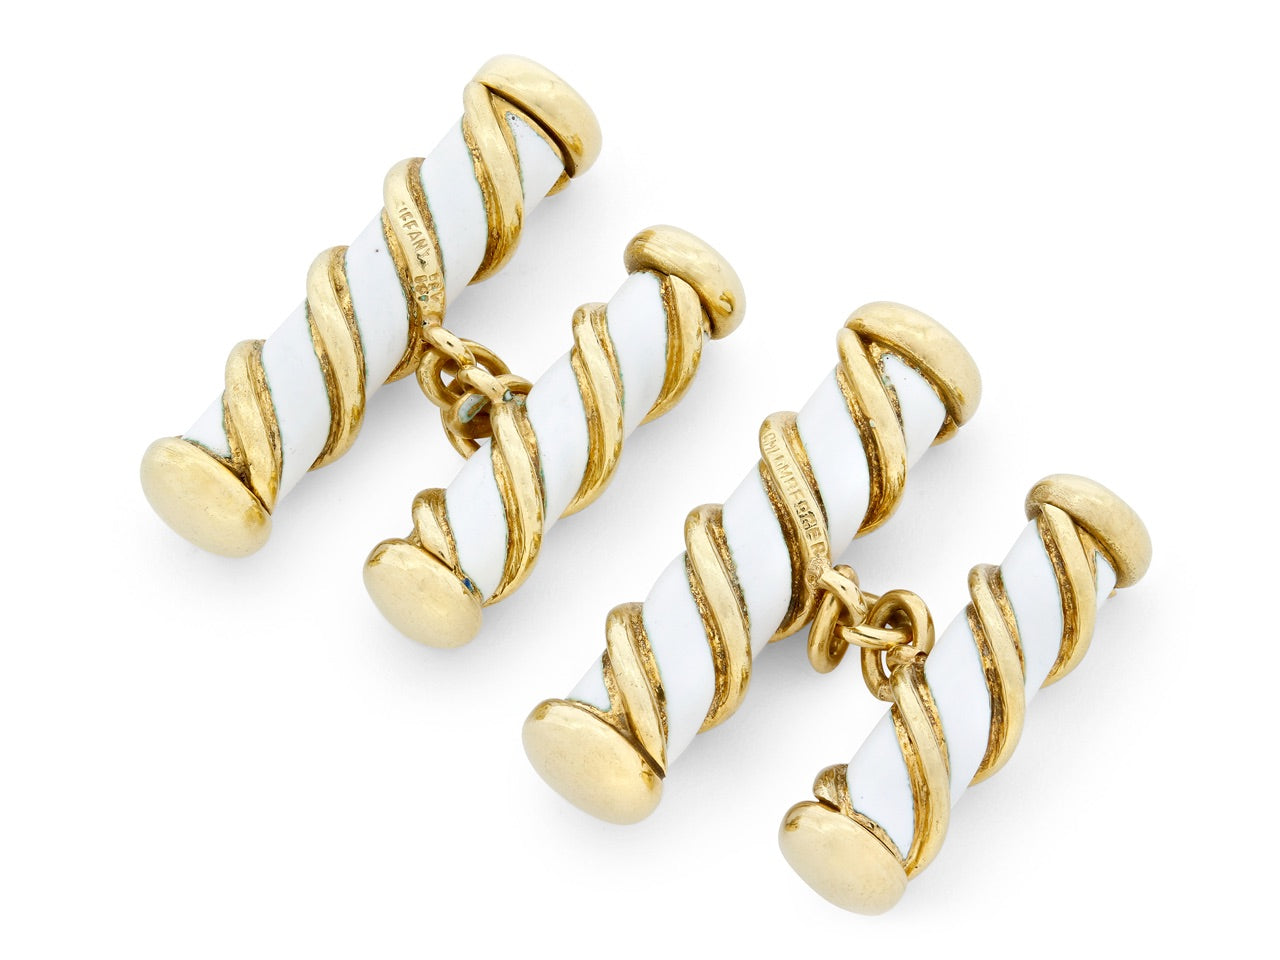 Tiffany & Co. Schlumberger White Enamel Cufflinks in 18K Gold